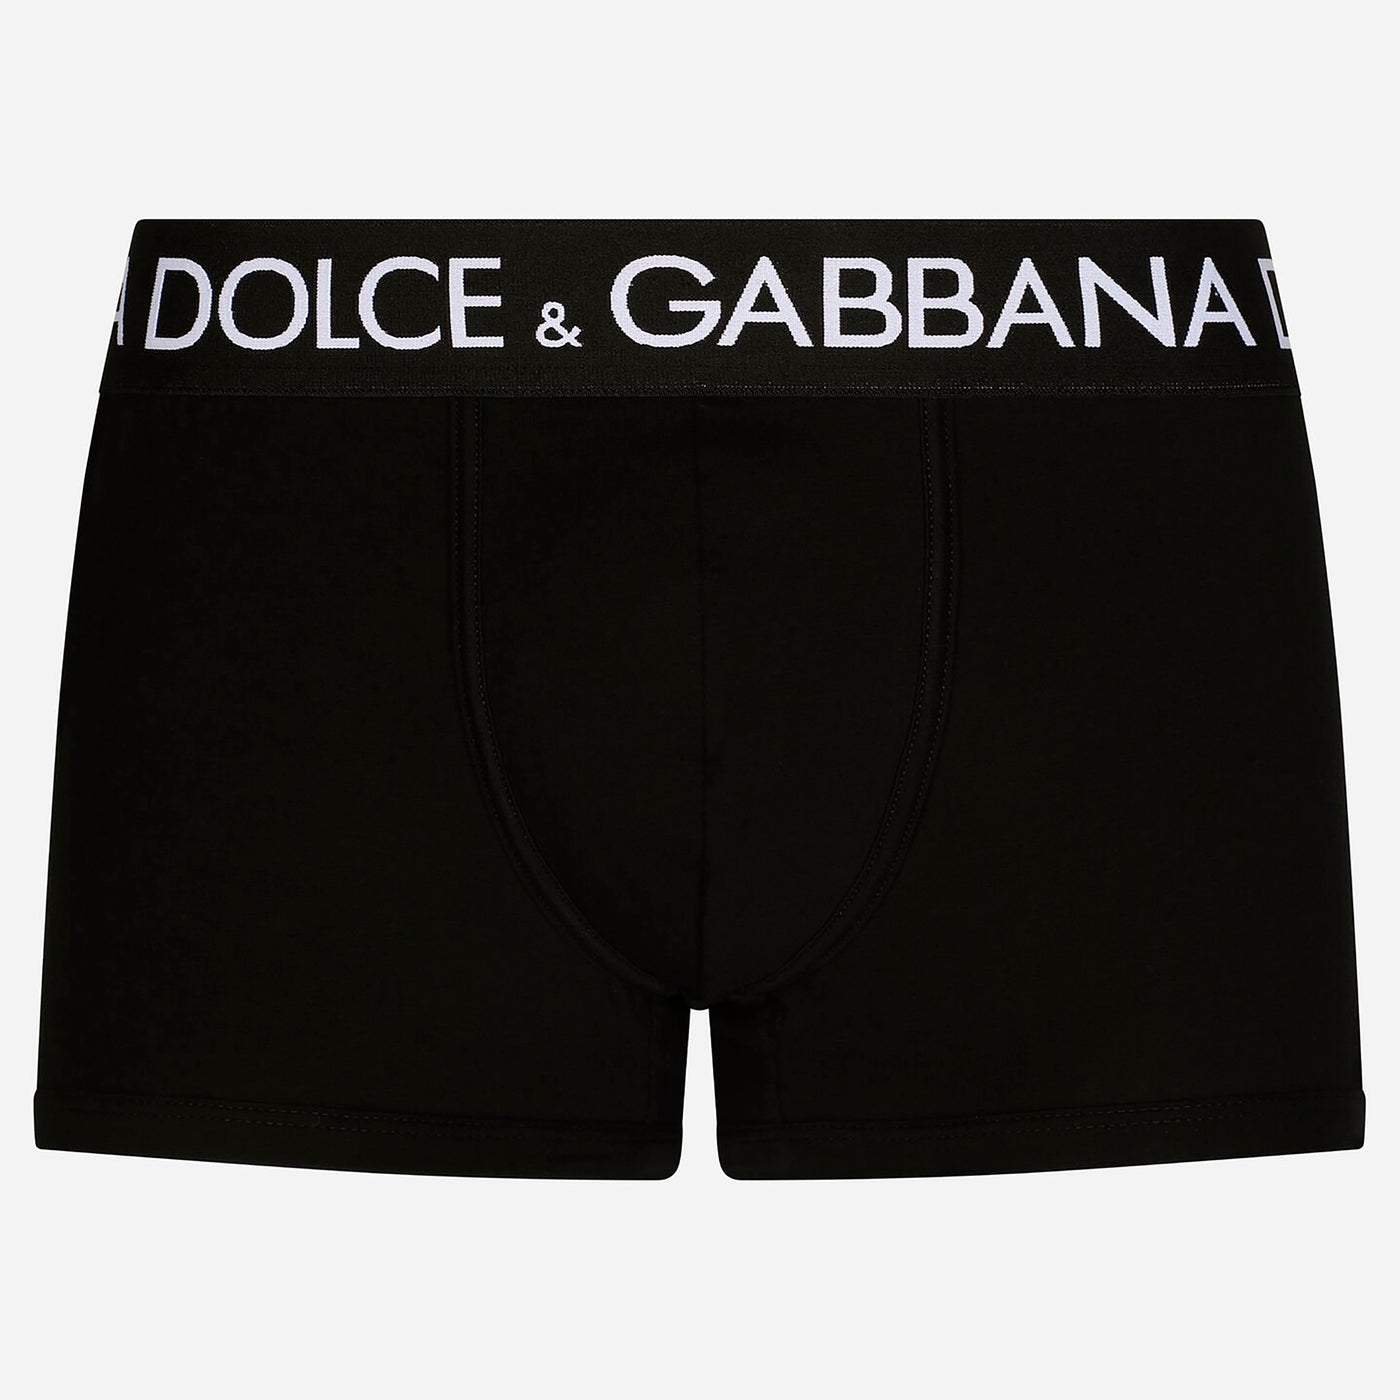 Dolce & Gabbana Two Way Stretch Jersey Boxers